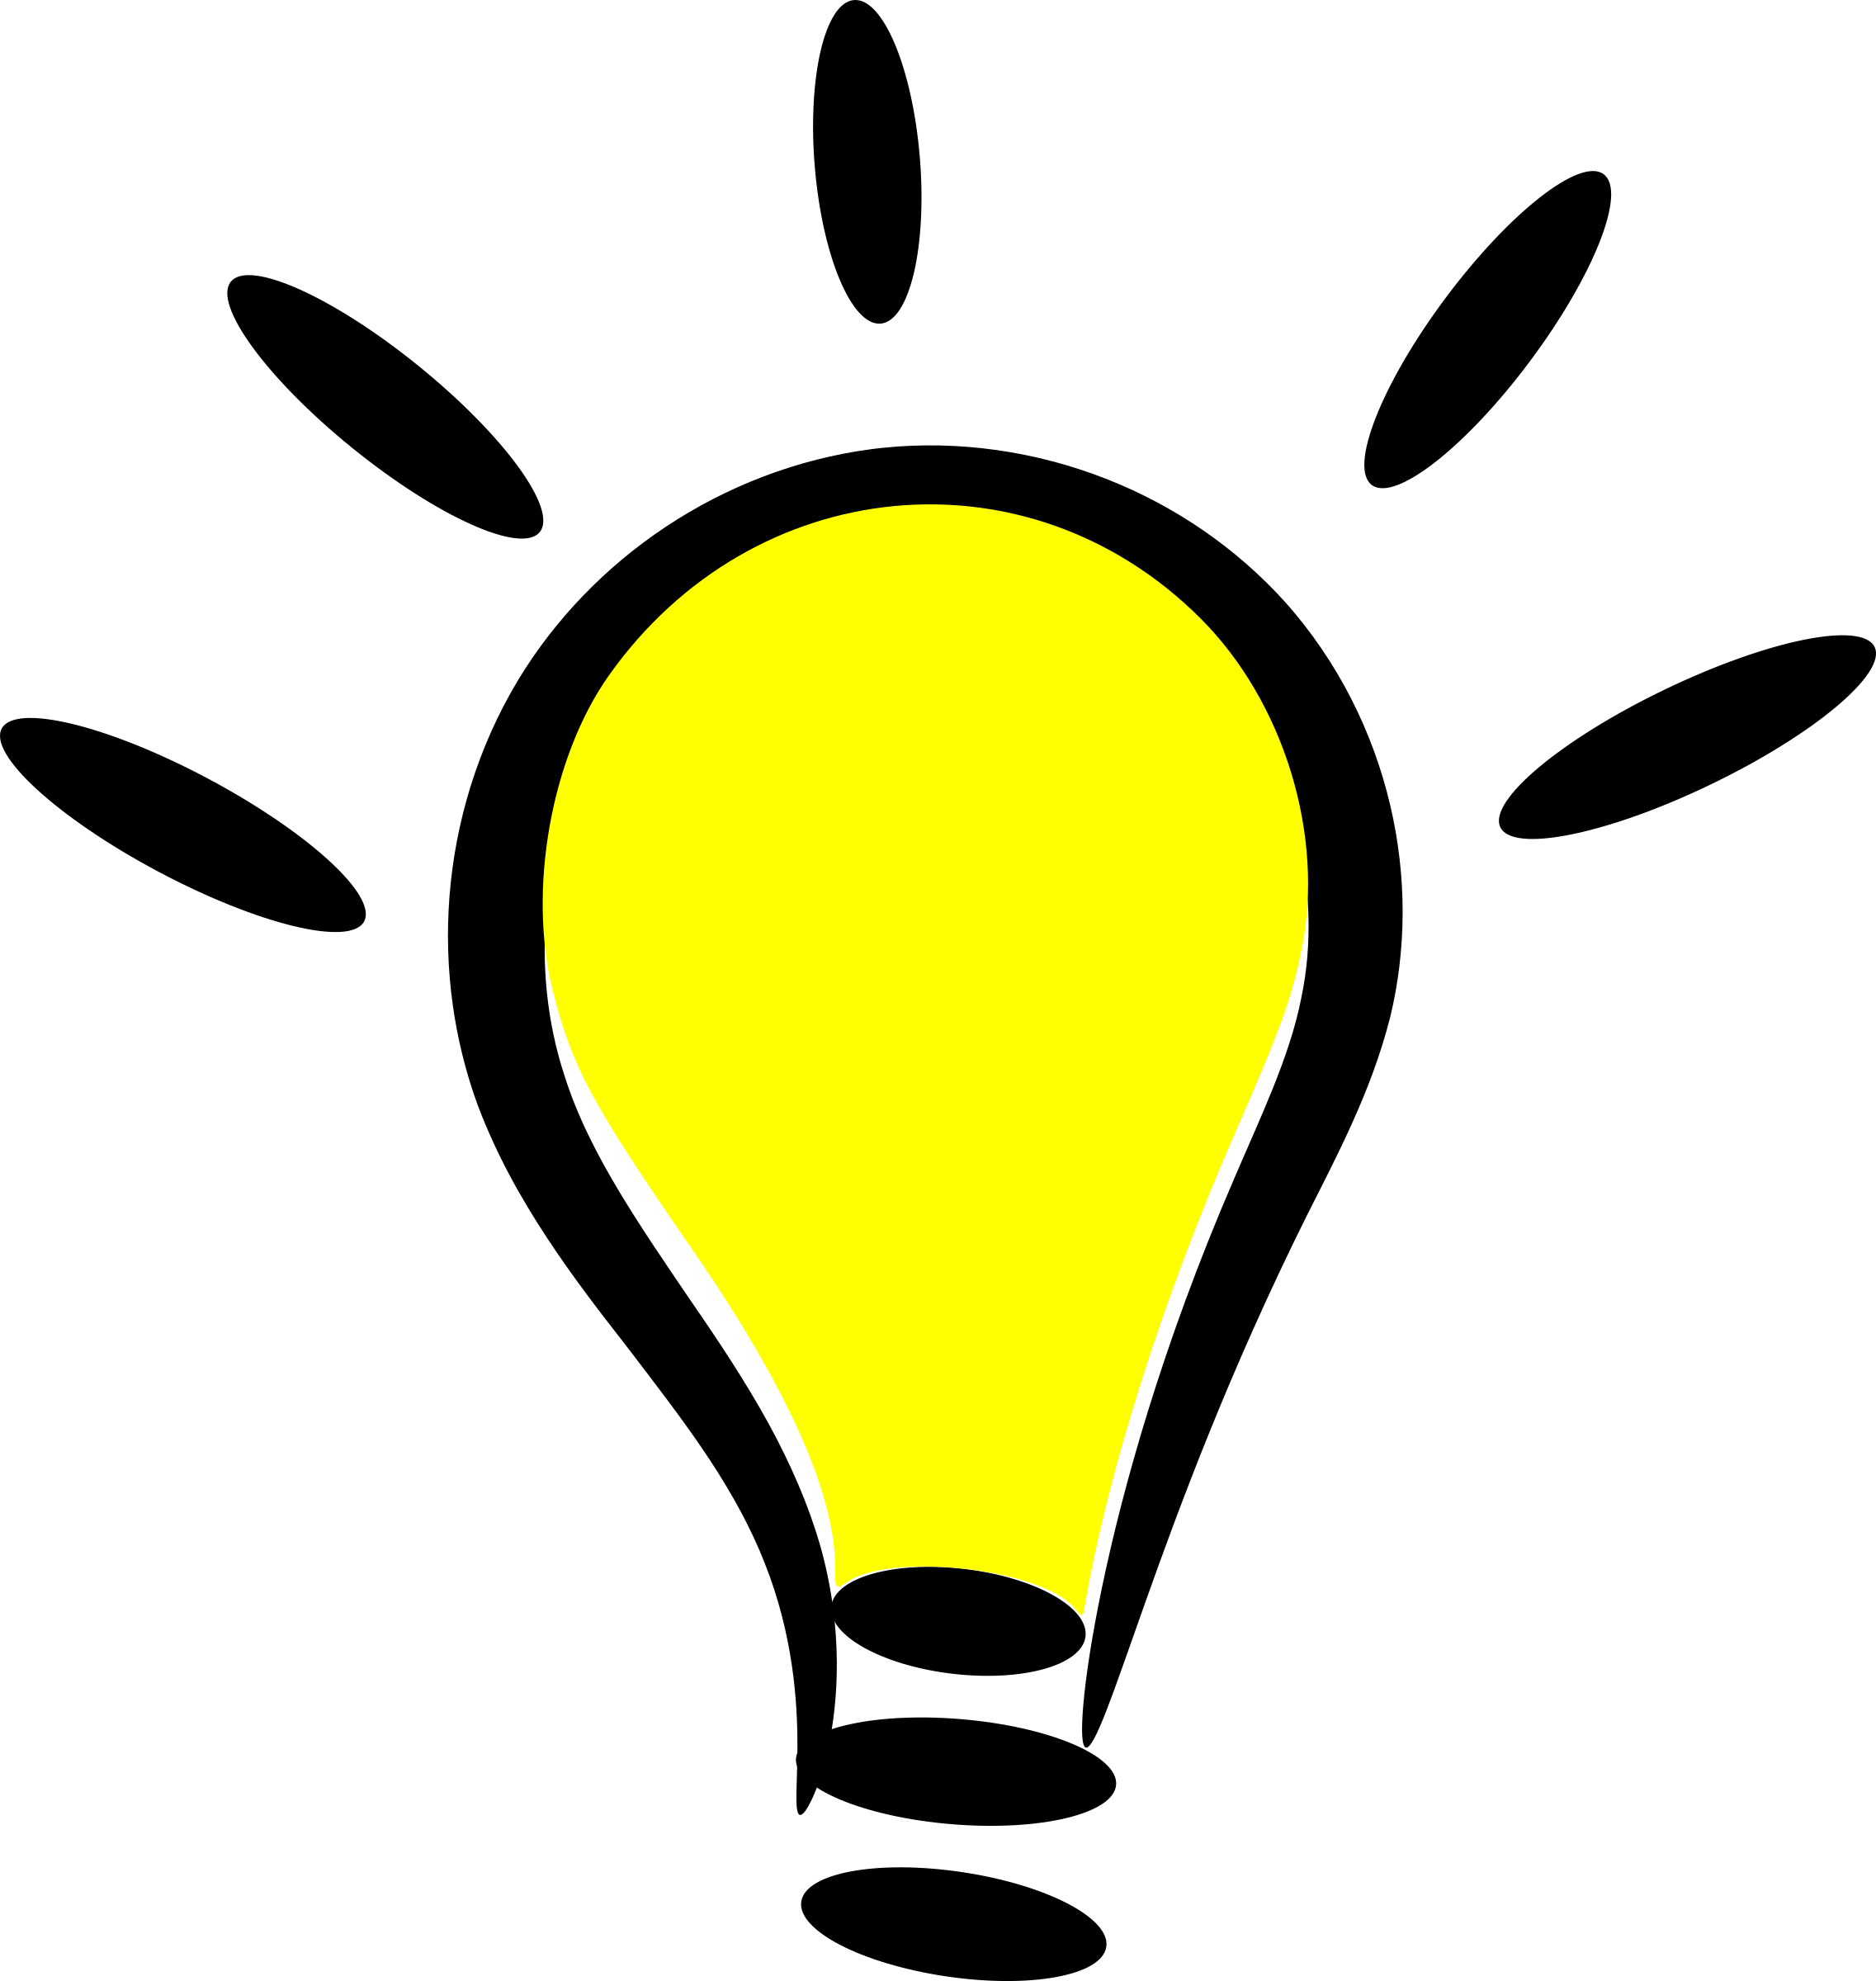 Light Bulb Clip Art Free Vect